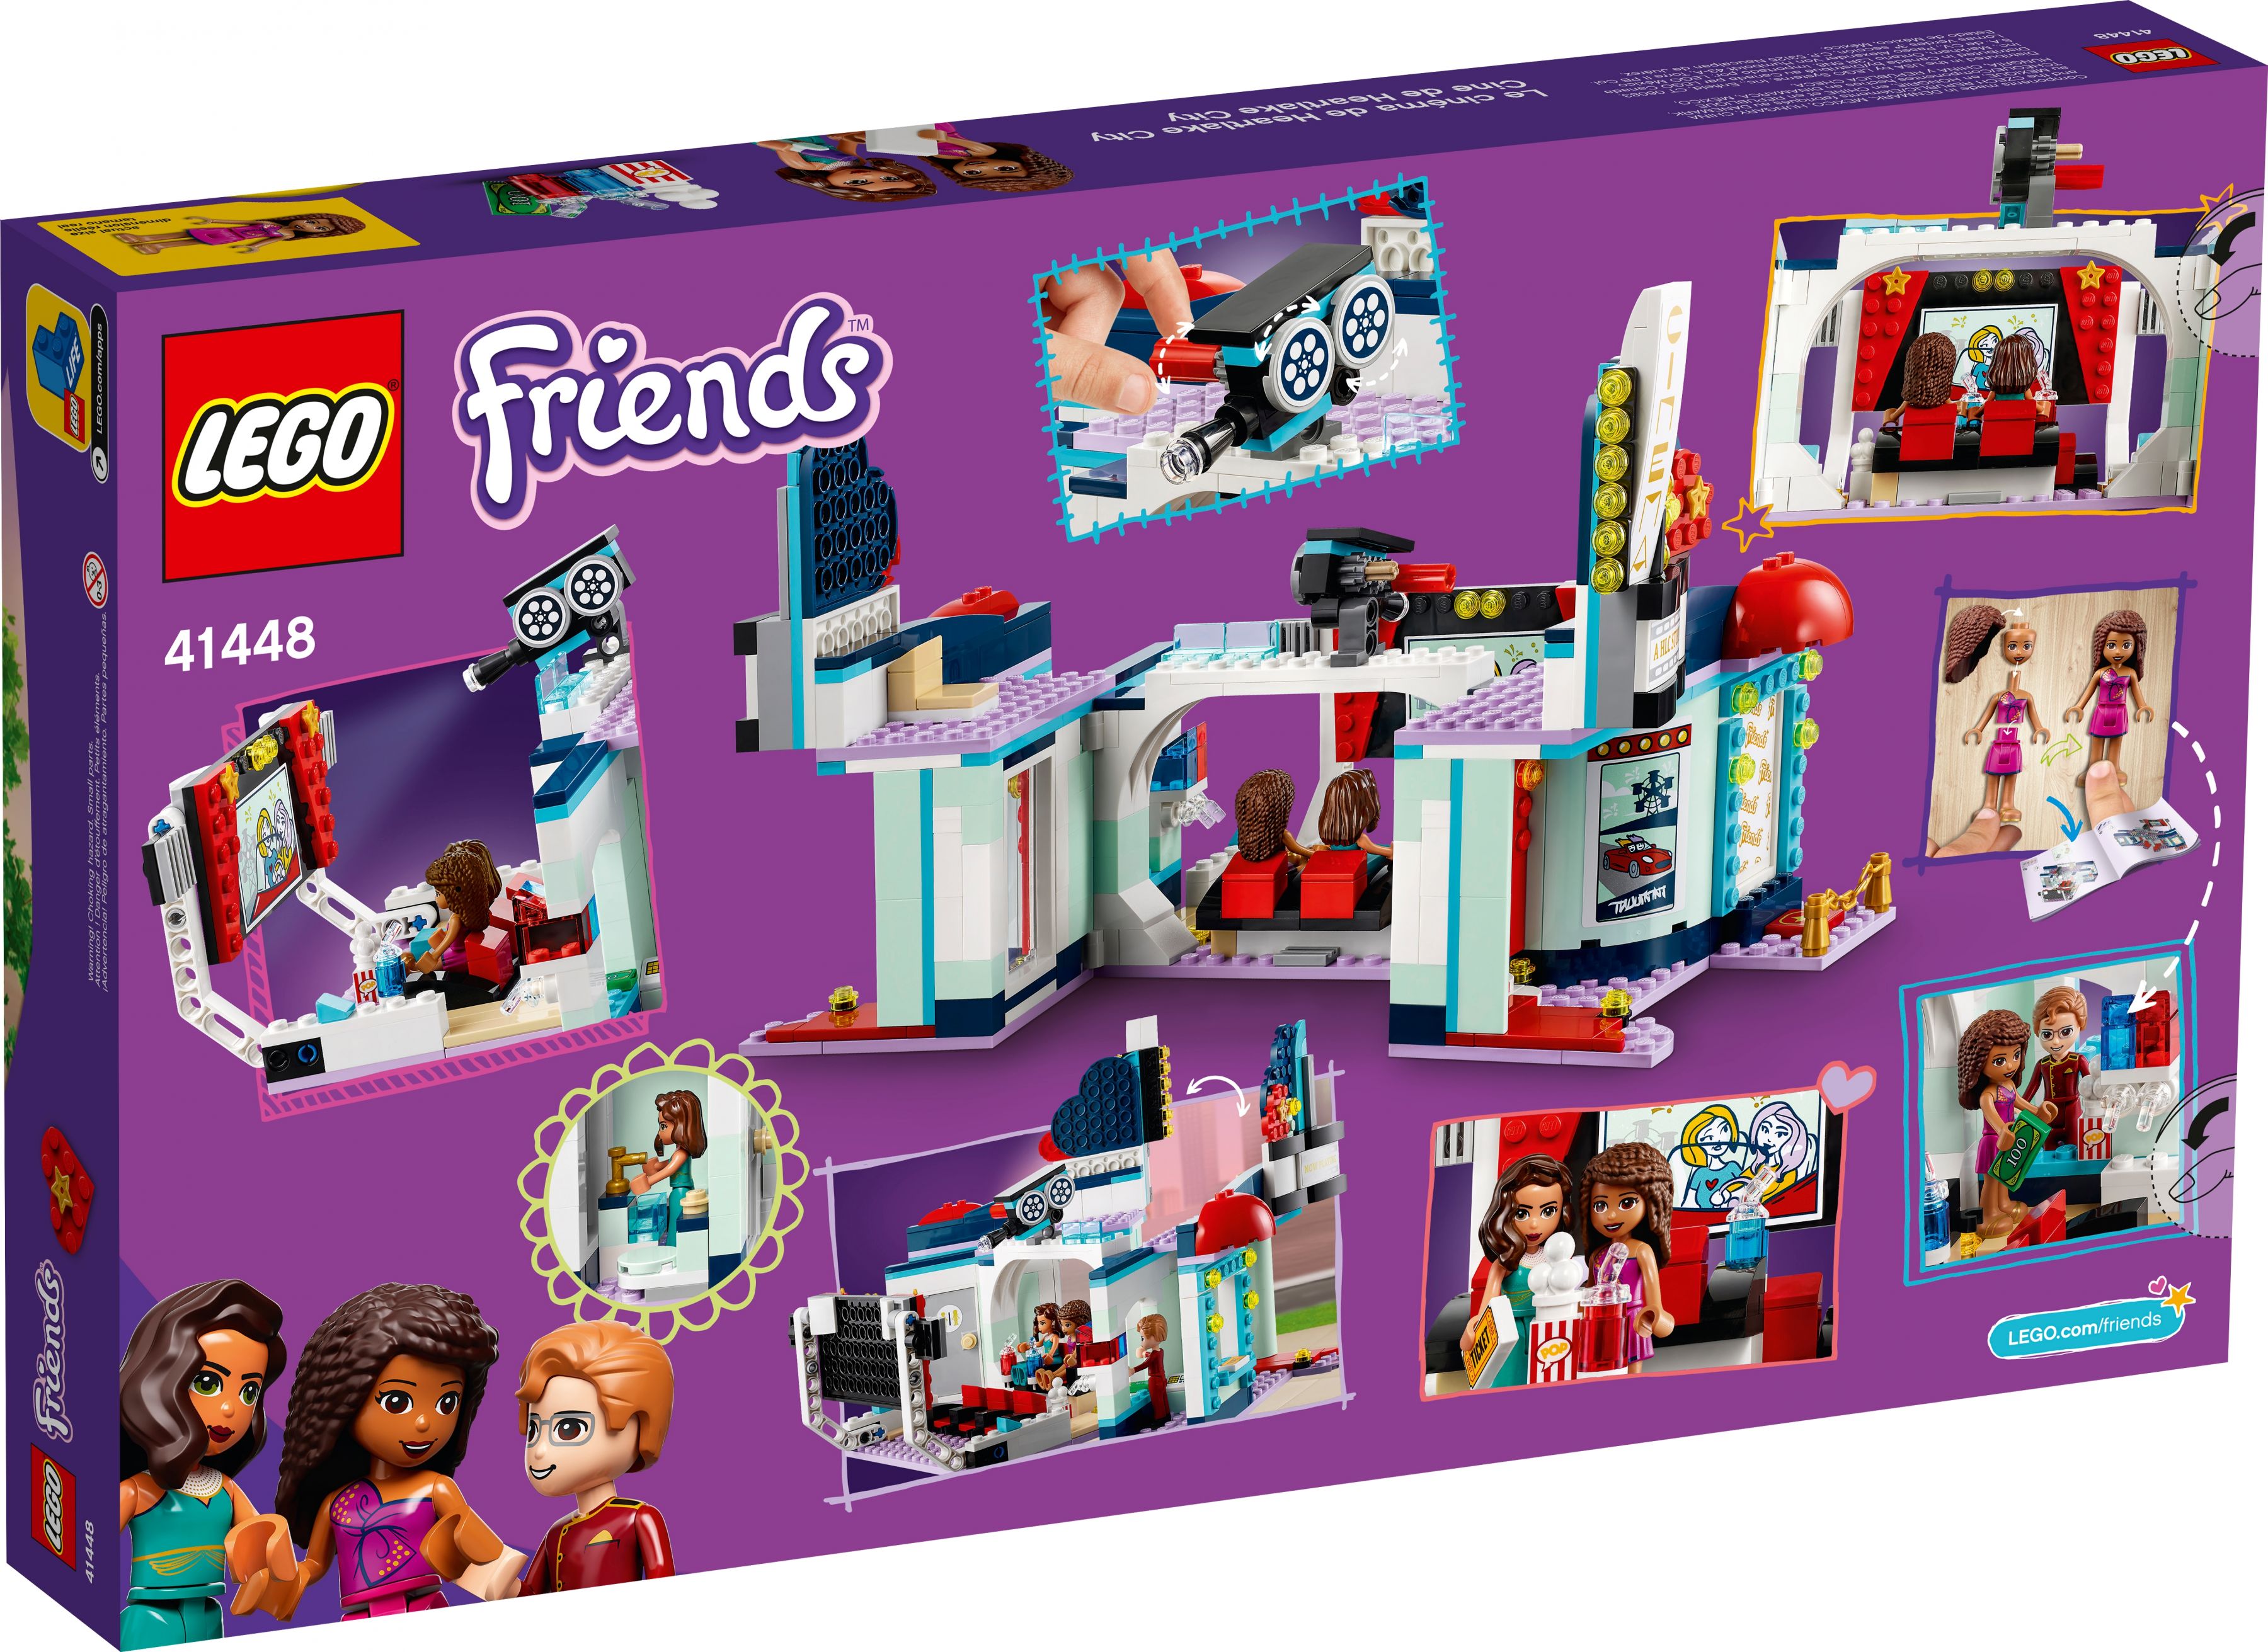 LEGO Friends 41448 Heartlake City Kino LEGO_41448_alt14.jpg